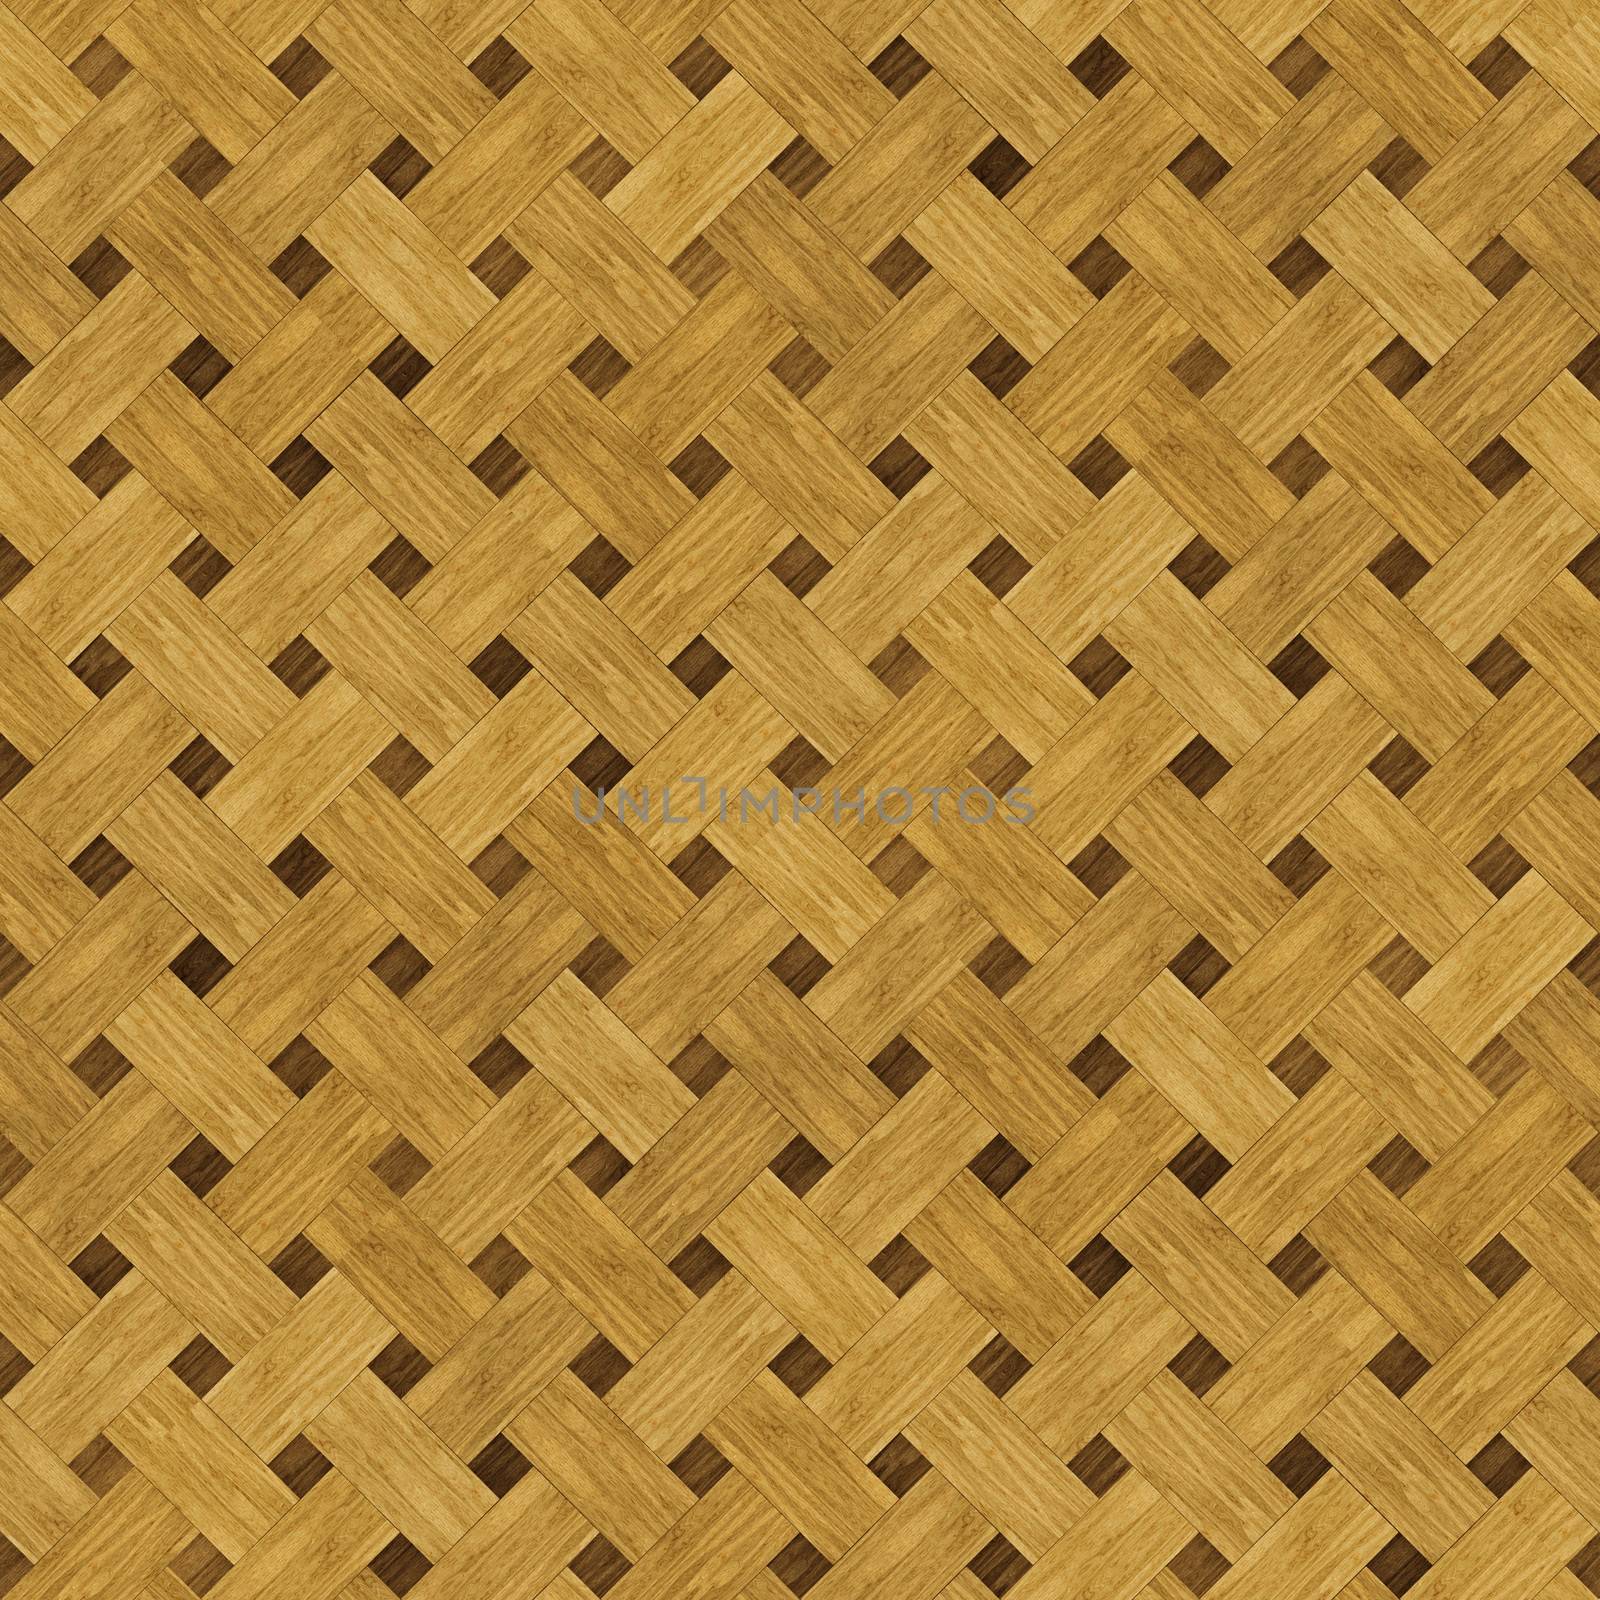 2d illustration of a wooden parquet texture